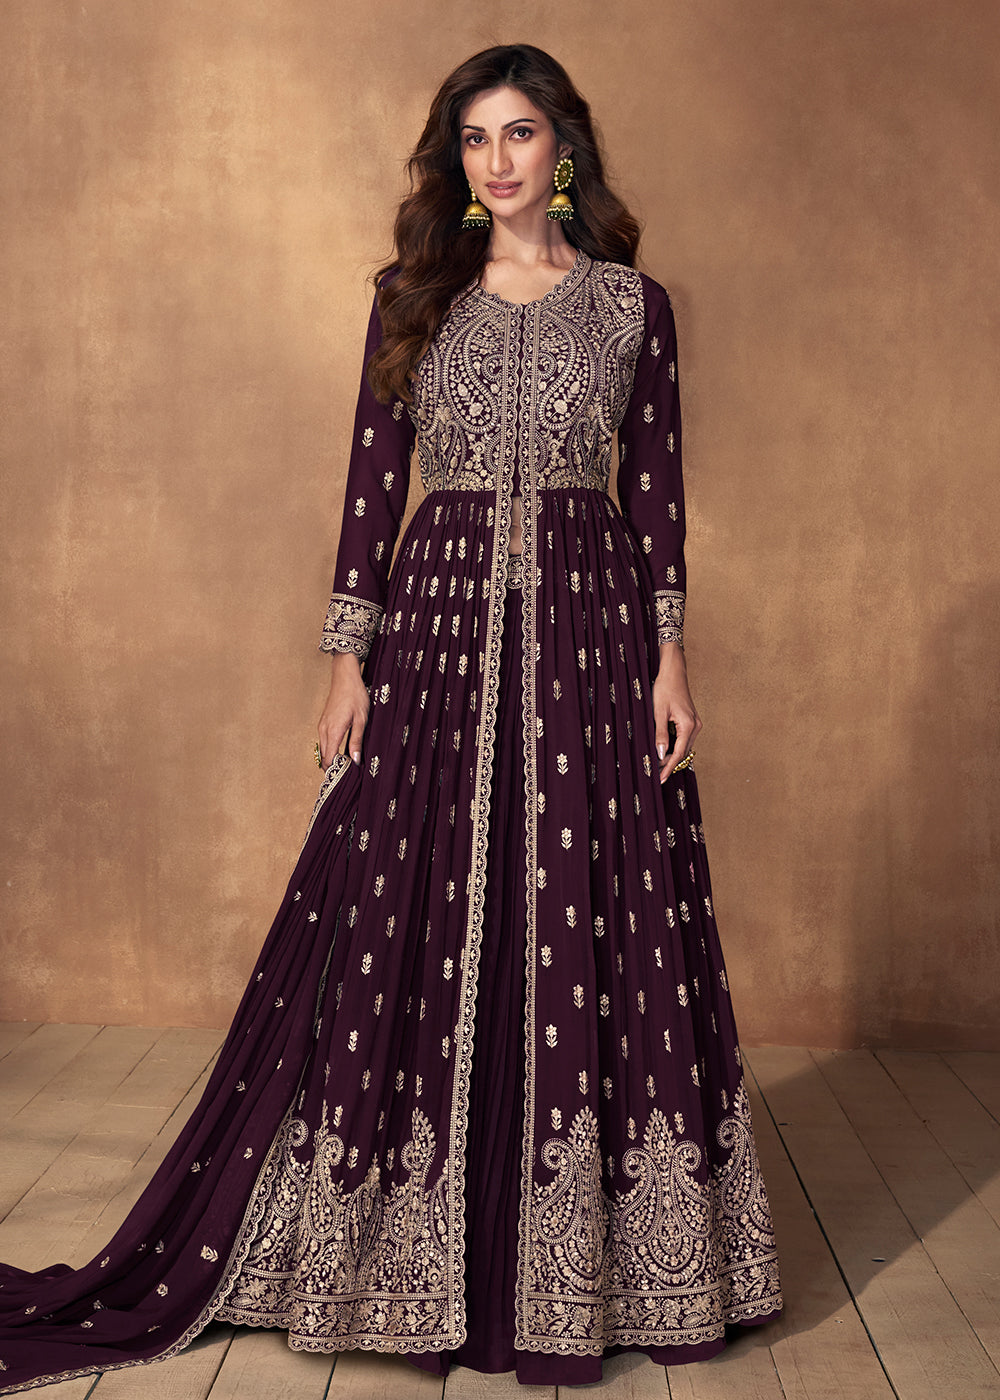 Buy Now Lehenga Style Plum Purple Wedding Wear Anarkali Suit Online in USA, UK, Australia, New Zealand, Canada & Worldwide at Empress Clothing.